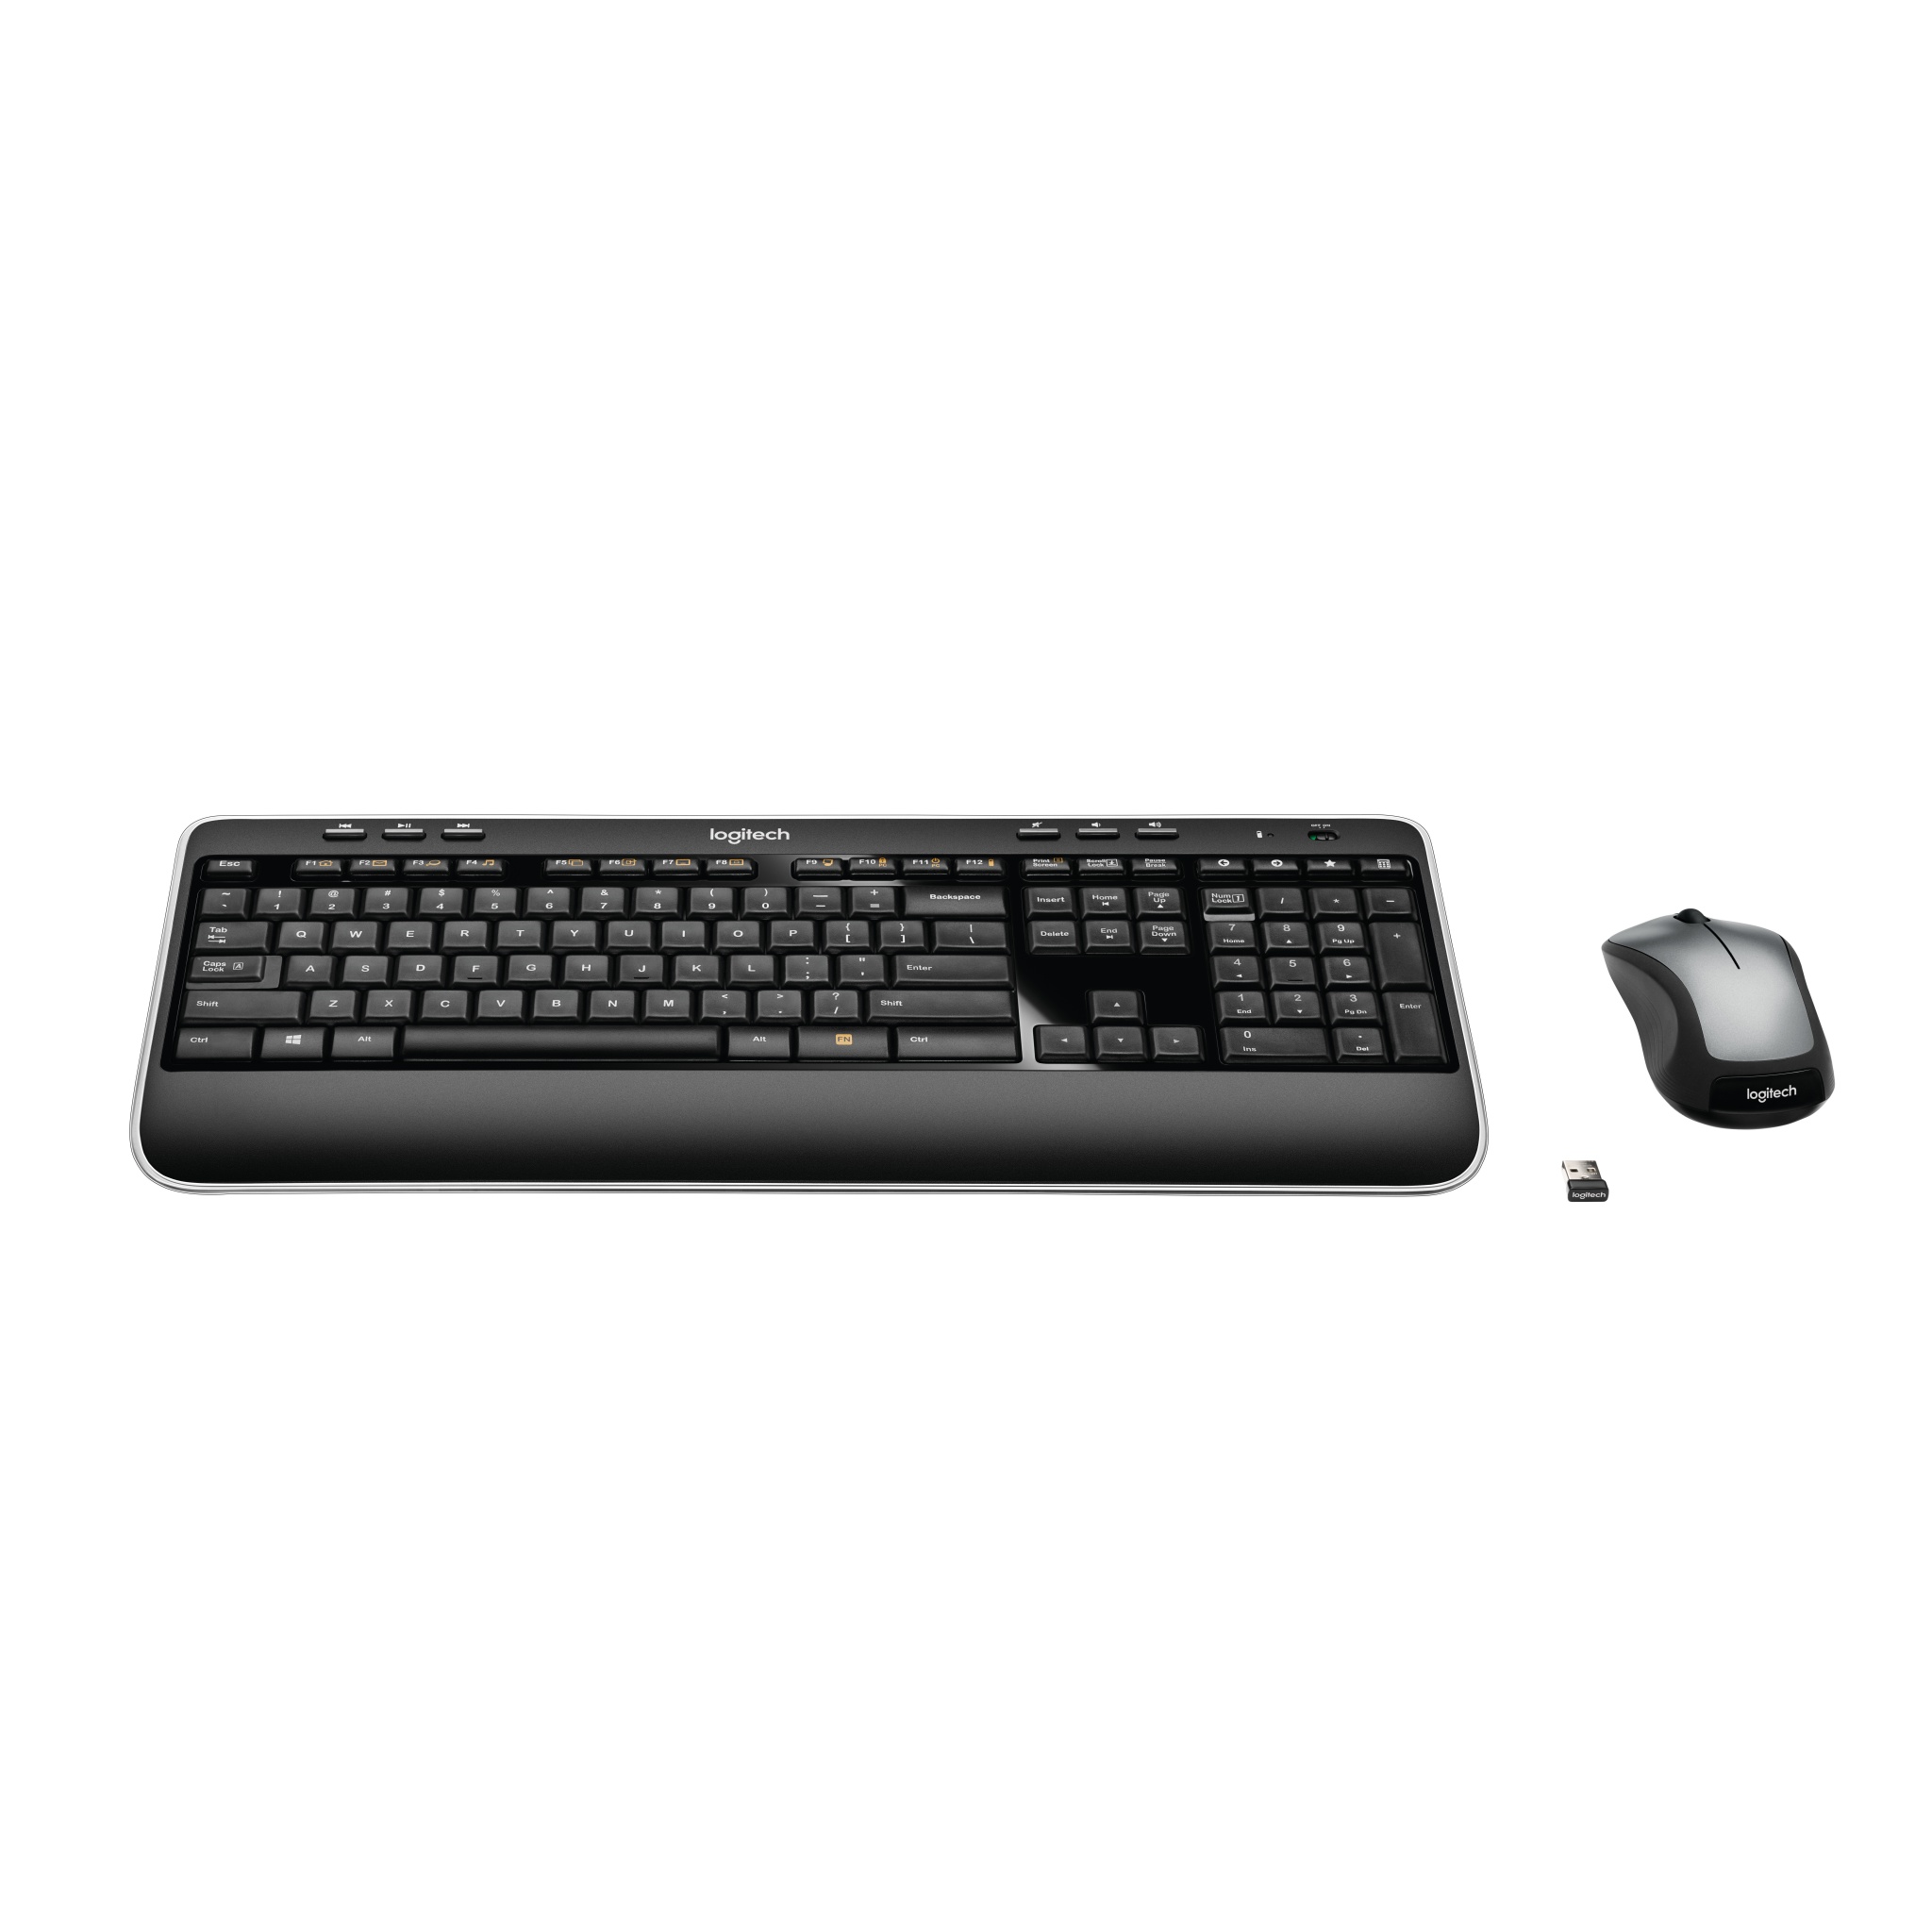 Blueprint indsats Give Logitech Wireless MK250 Keyboard + Mouse Combo - Spanish Layout QWERTY